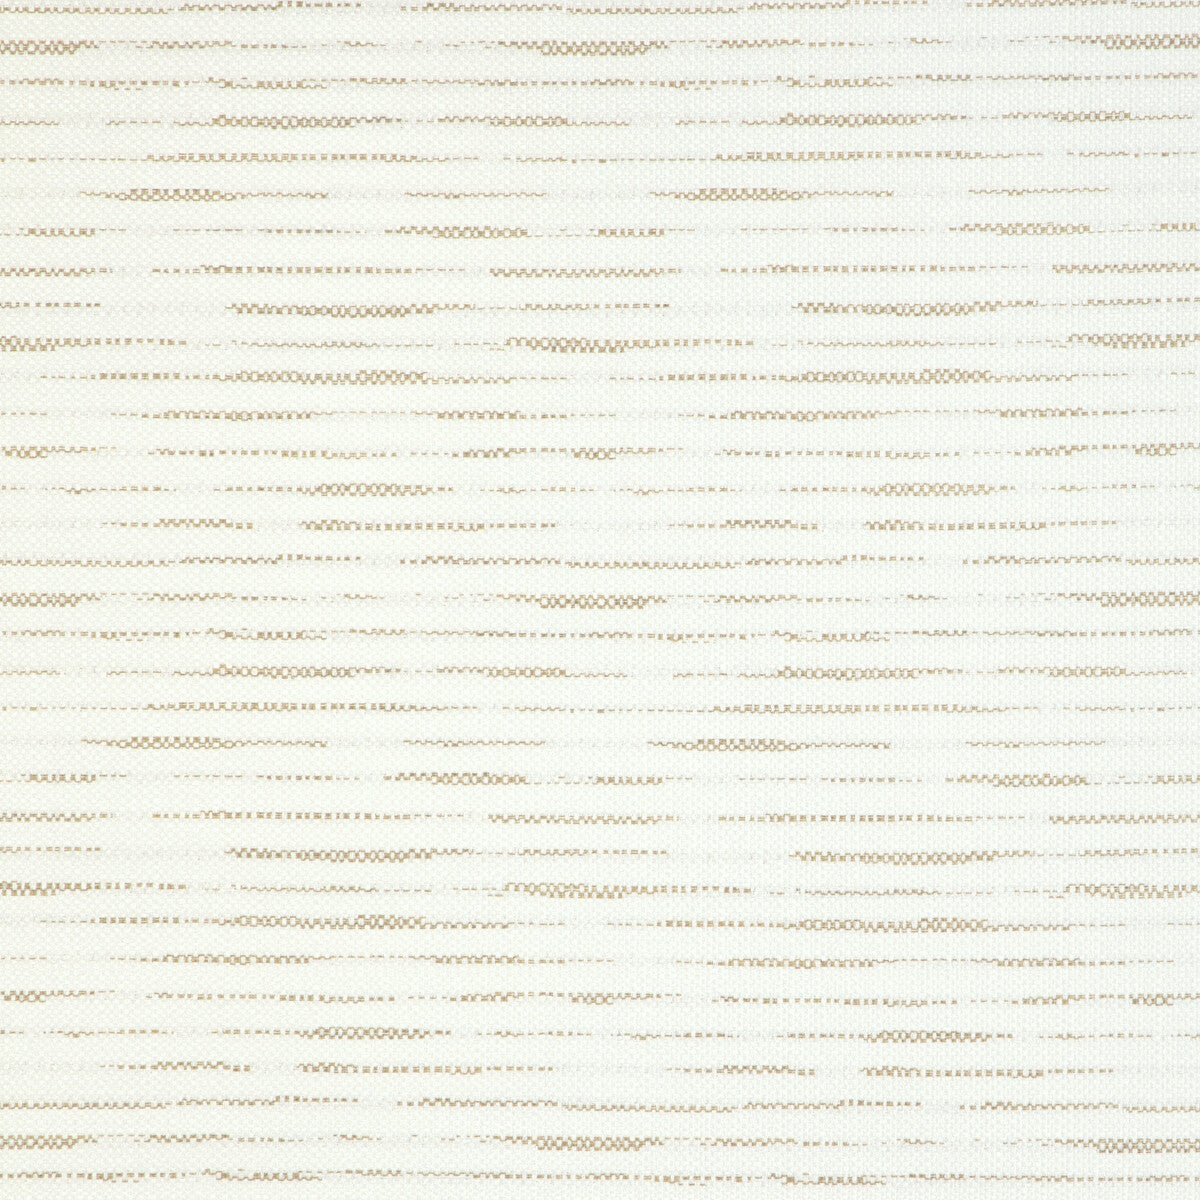 Kravet Design fabric in 36797-16 color - pattern 36797.16.0 - by Kravet Design in the Sea Island Indoor/Outdoor collection